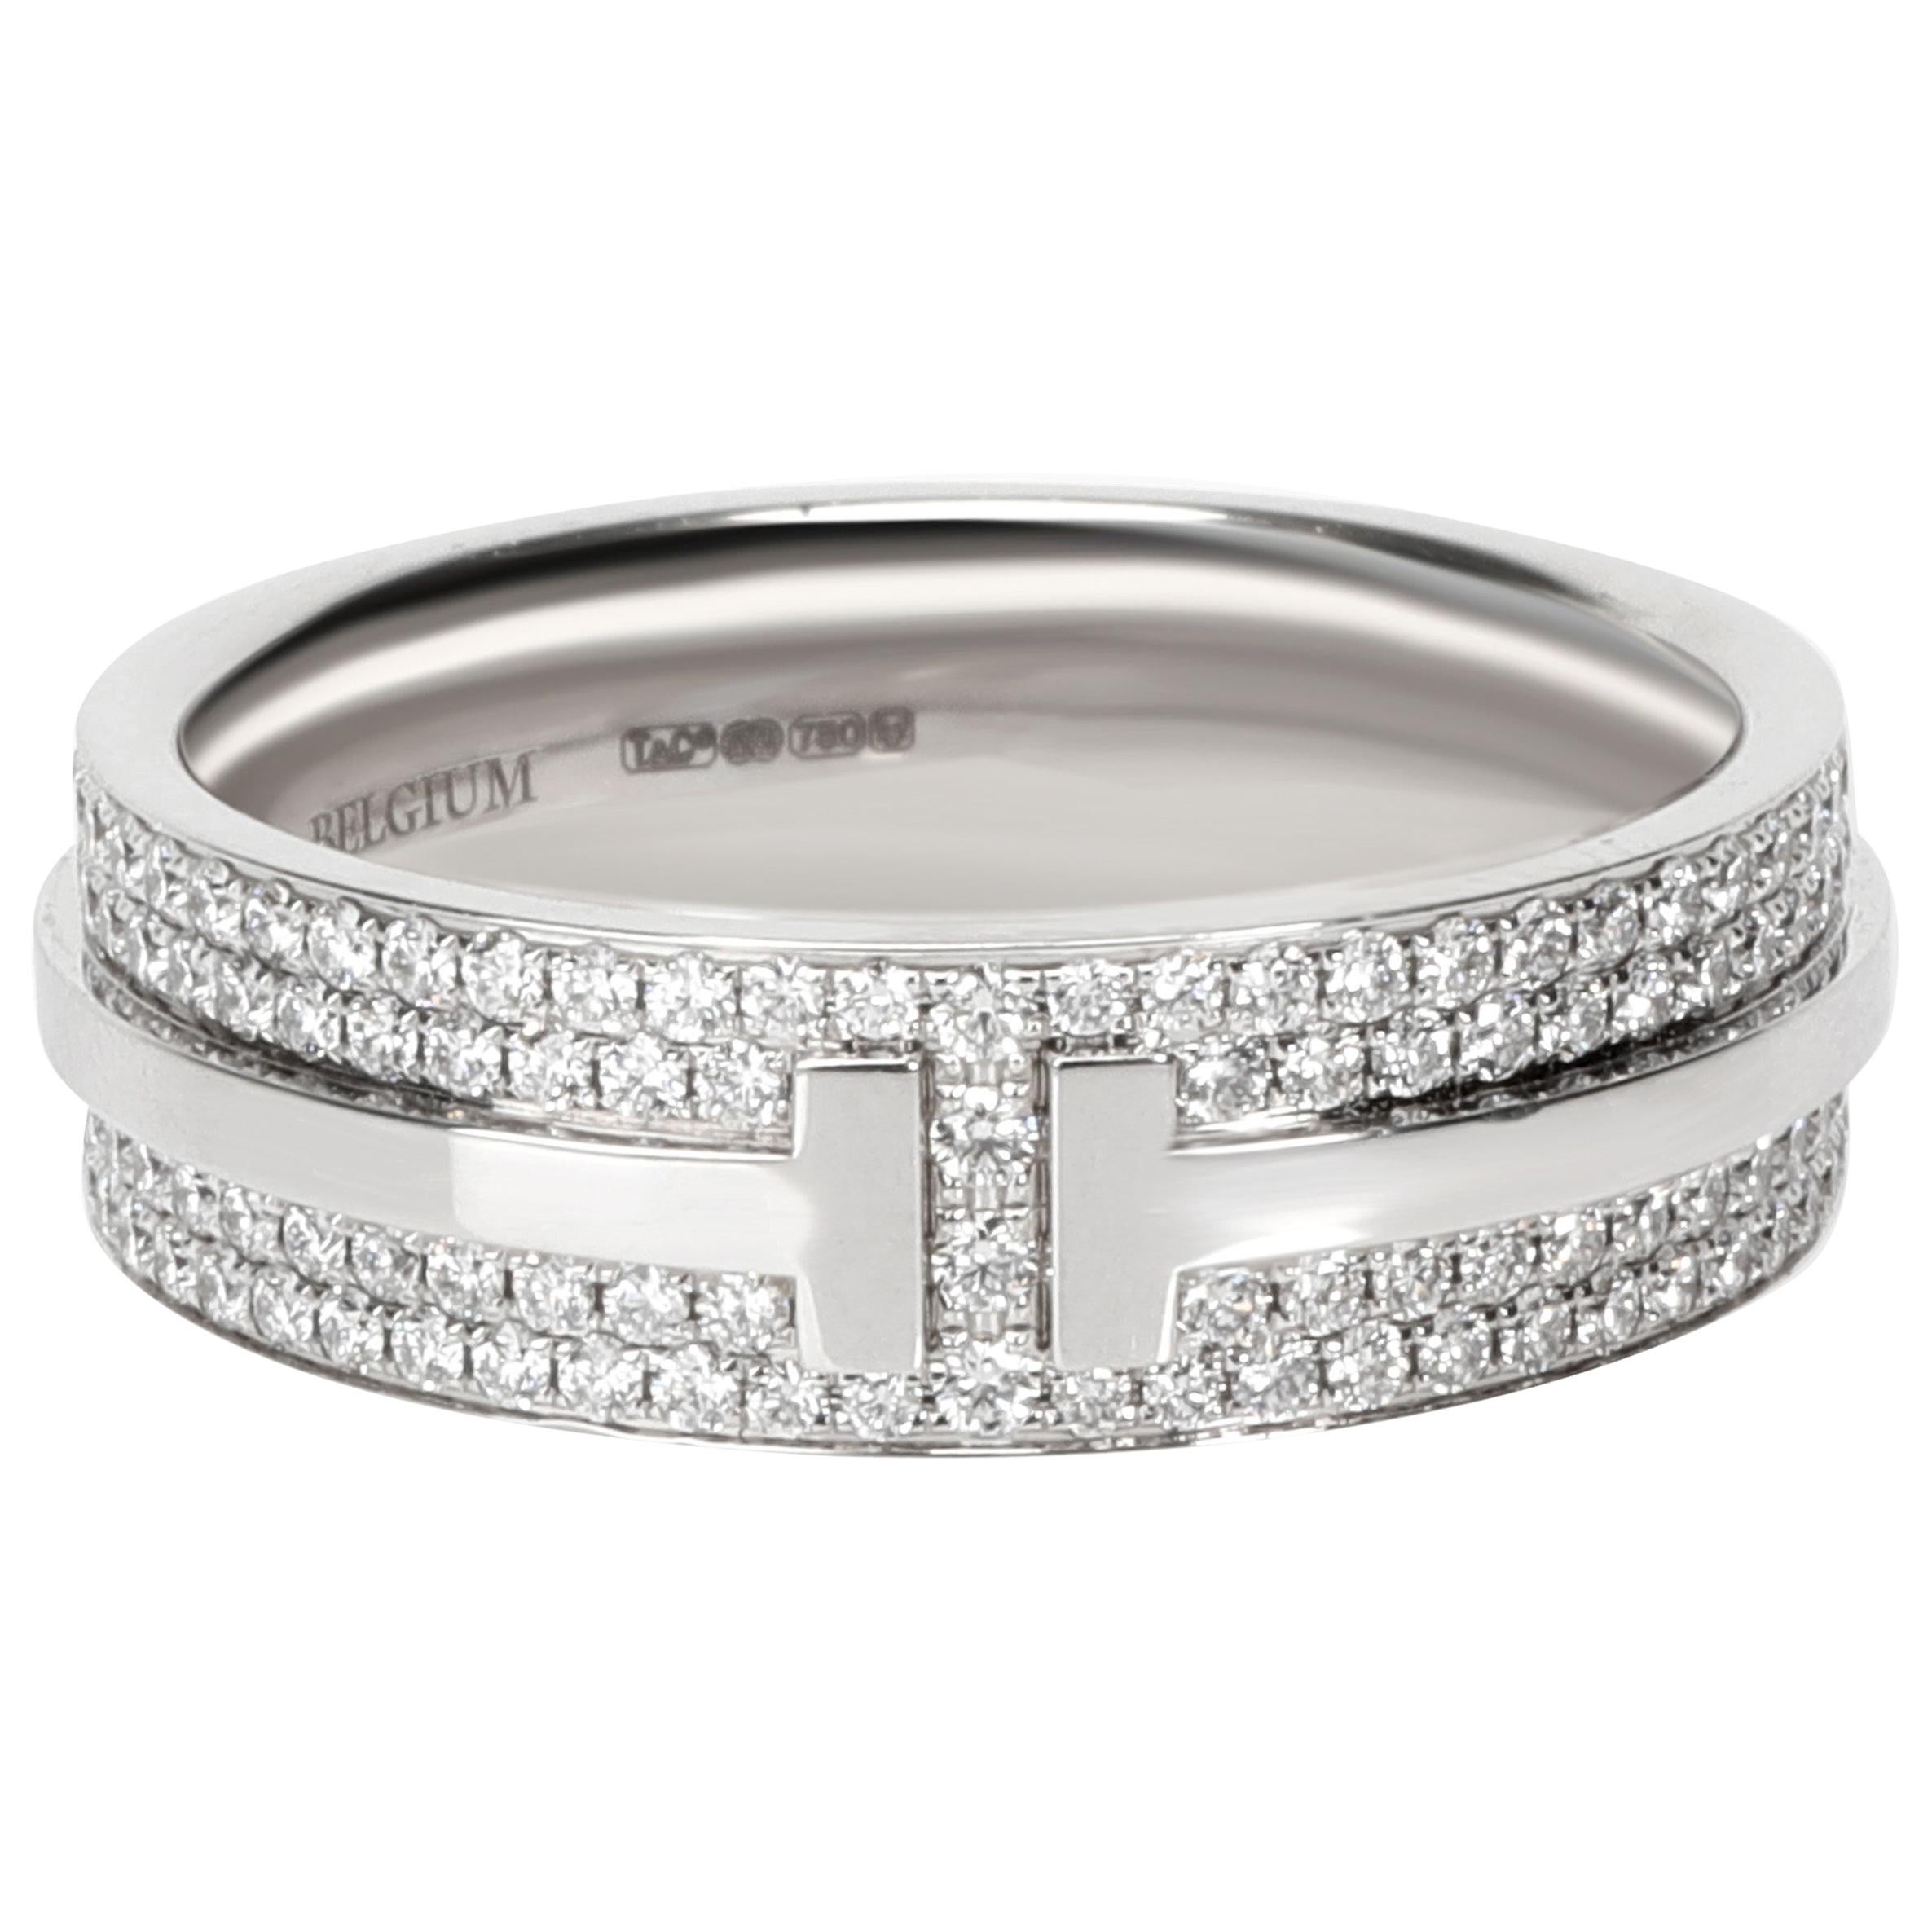 Tiffany & Co T Wide Pavé Diamond Ring in 18 Karat White Gold 0.58 Carat